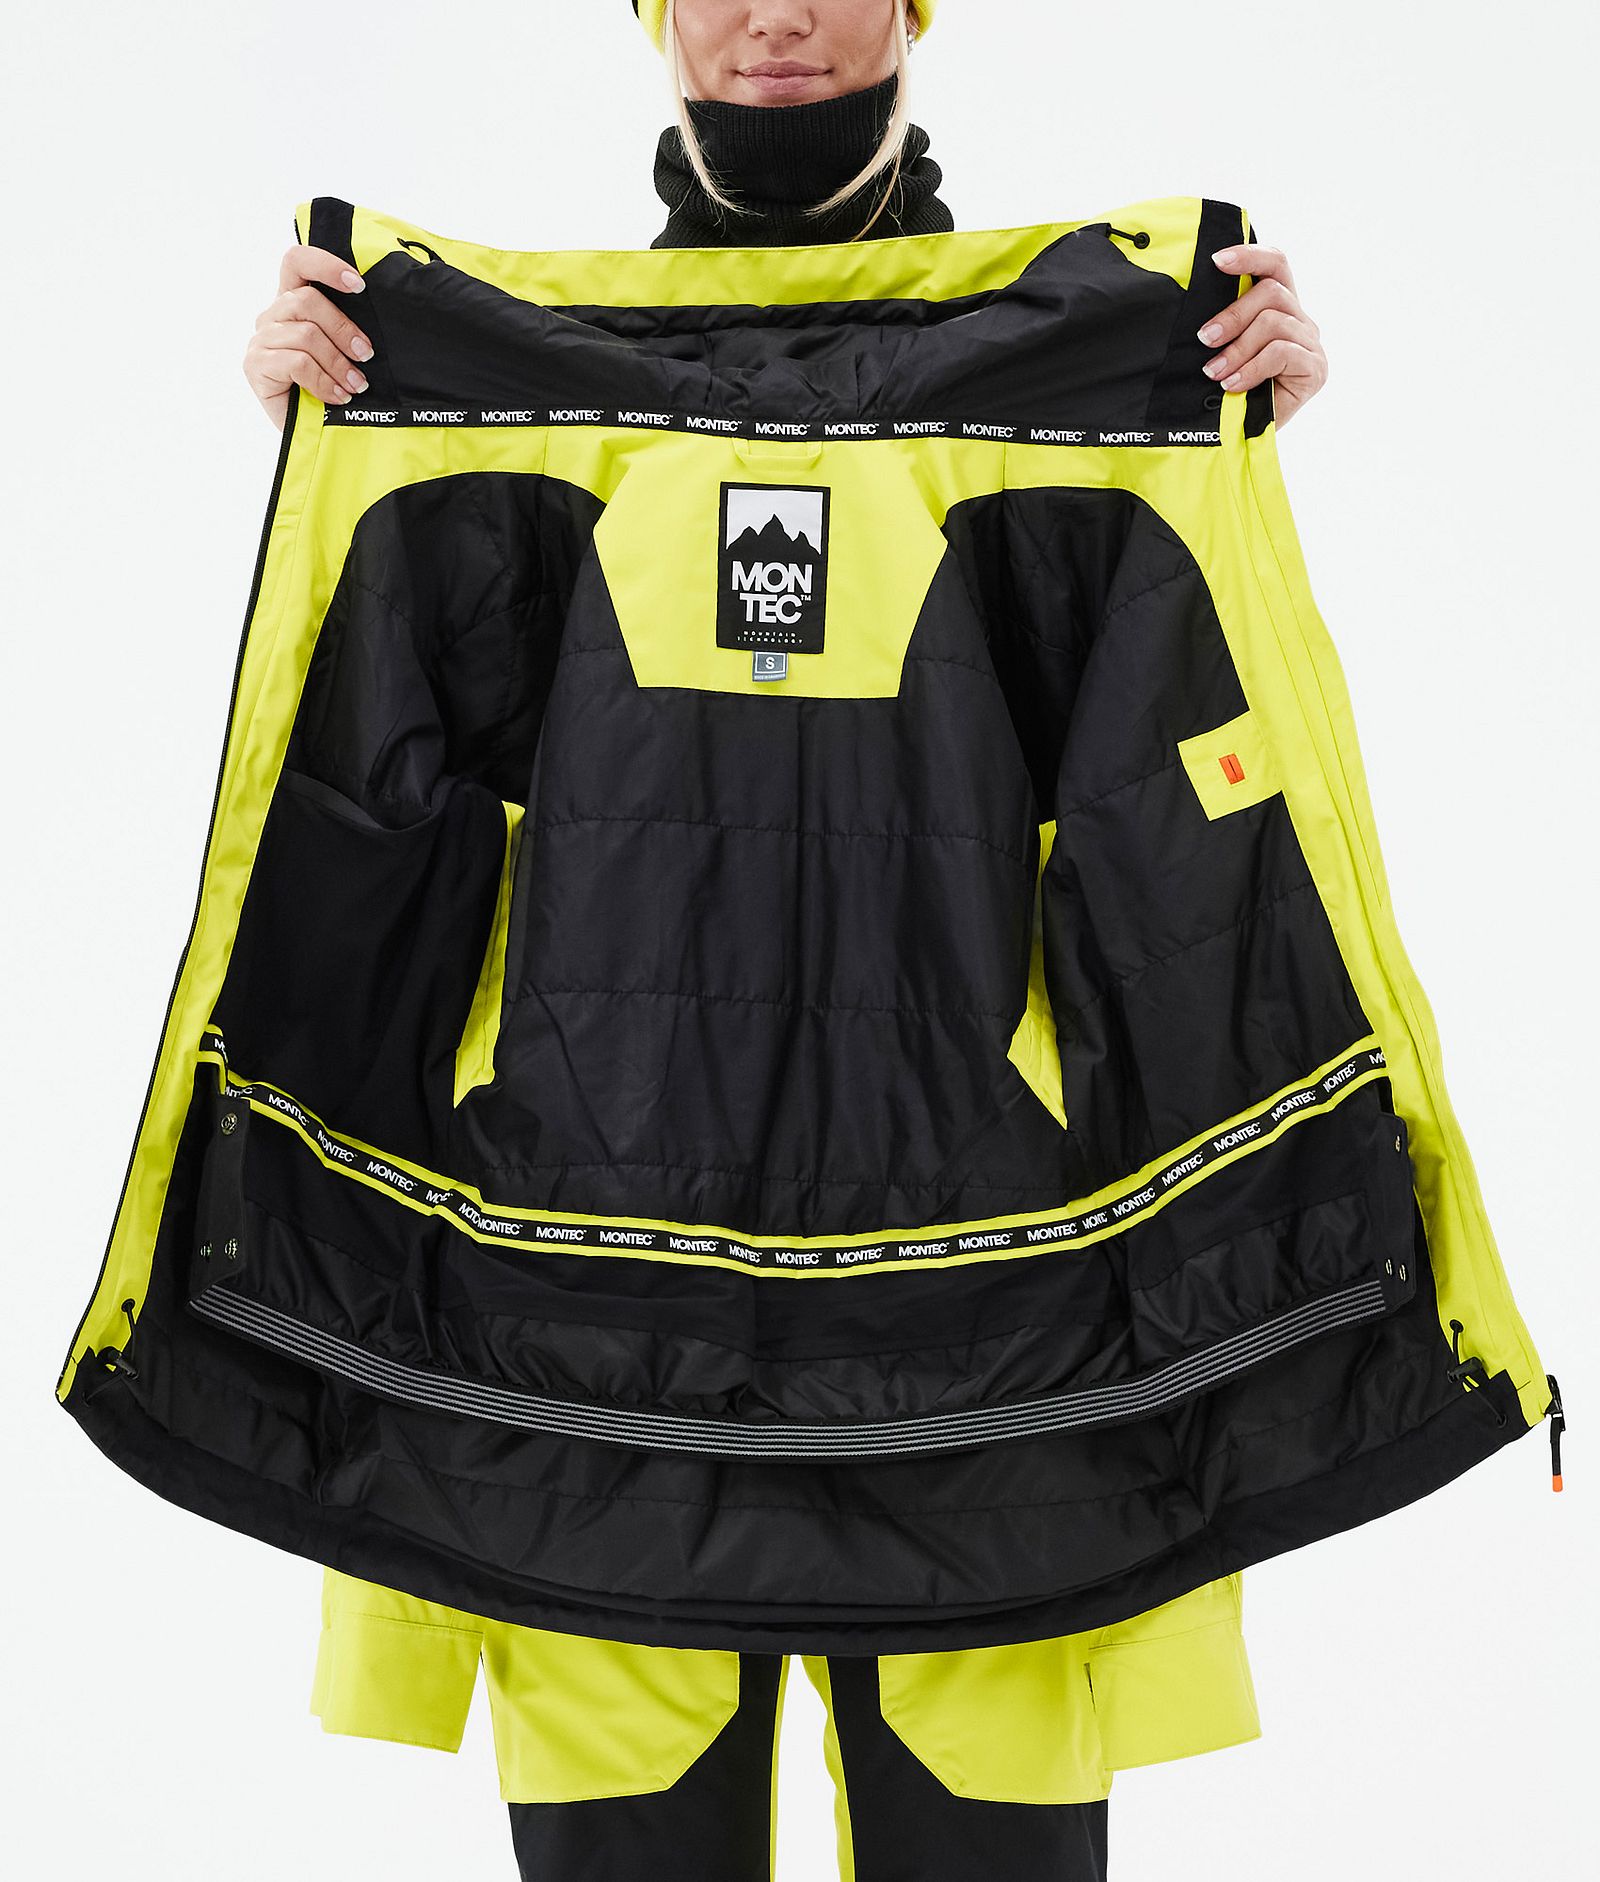 Moss W Ski Jacket Women Bright Yellow/Black